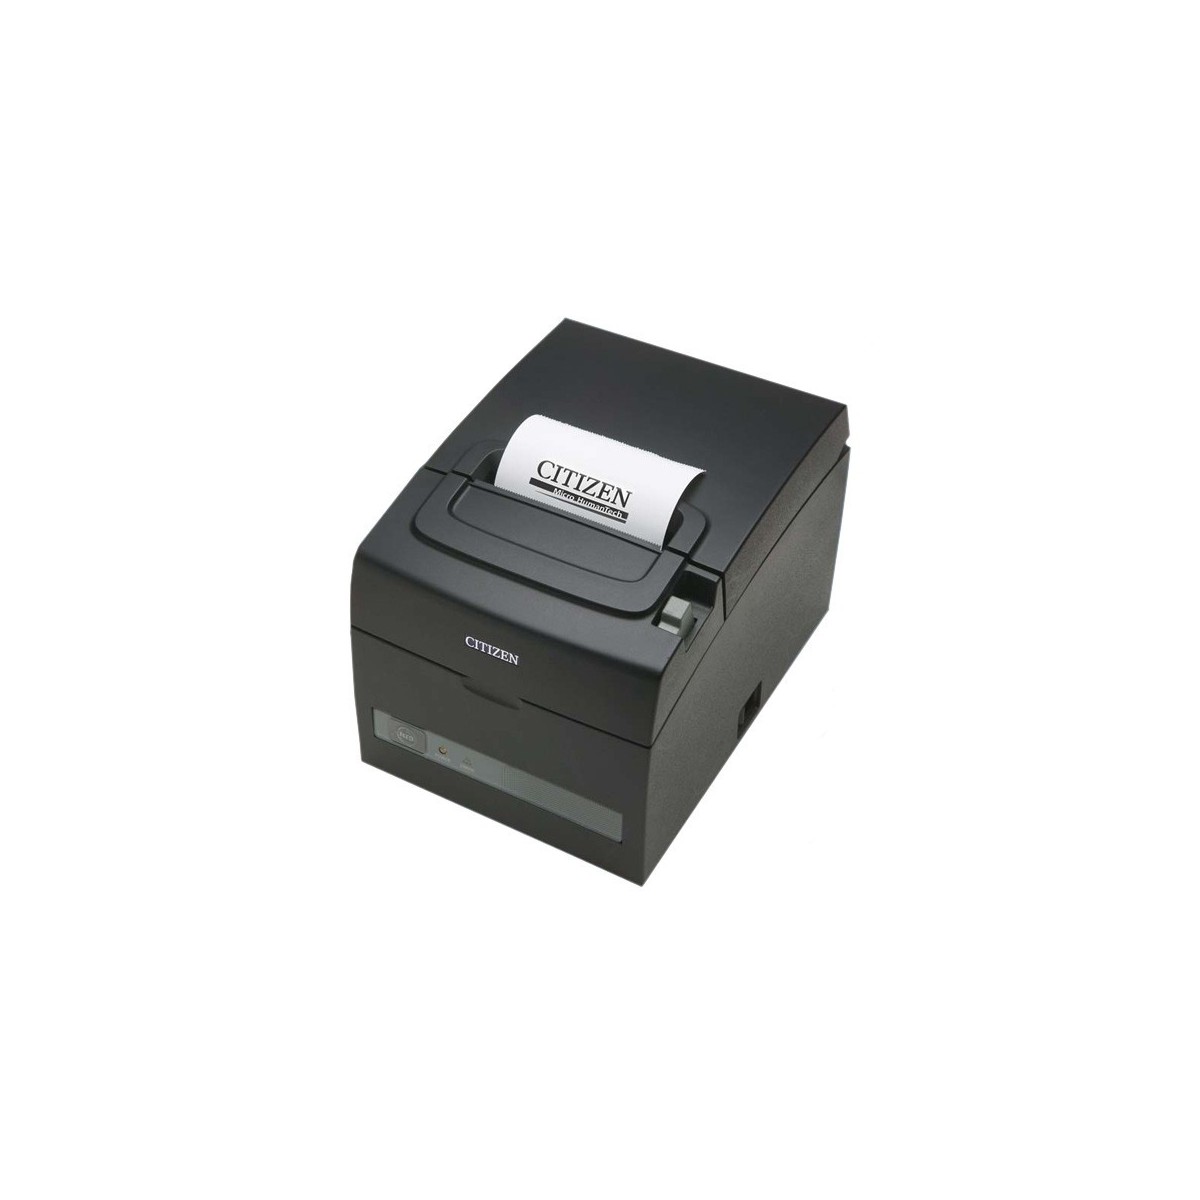 Citizen CT-S310II - Thermal - POS printer - 160 mm/sec - 1.5 x 3 mm - 65 - 75 µm - 8.3 cm